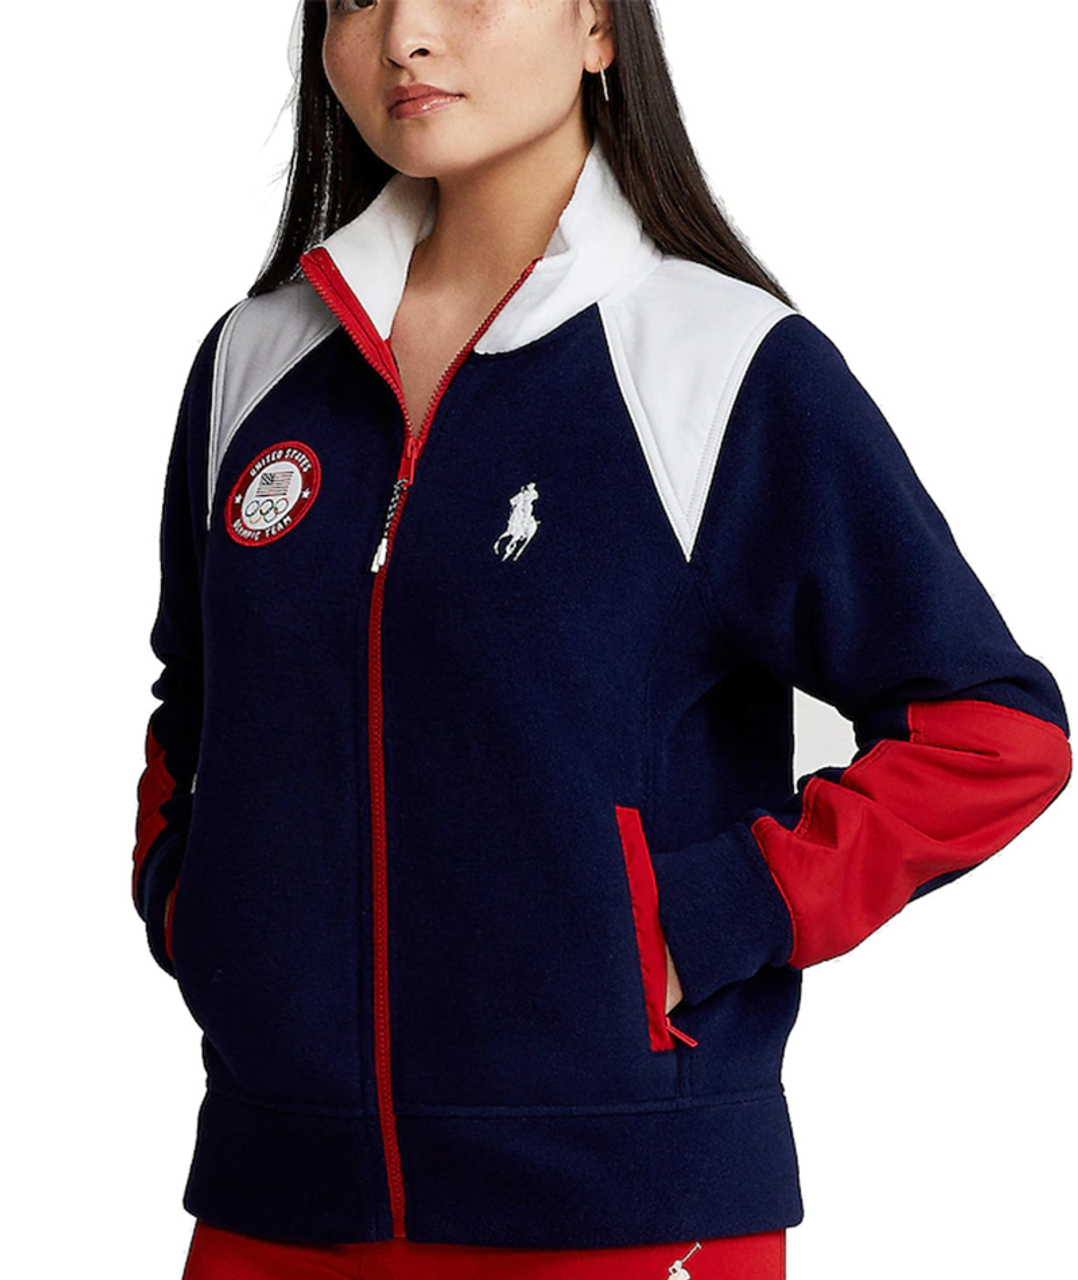 Team USA 2022 Womens Olympics Opening Ceremony Jacket